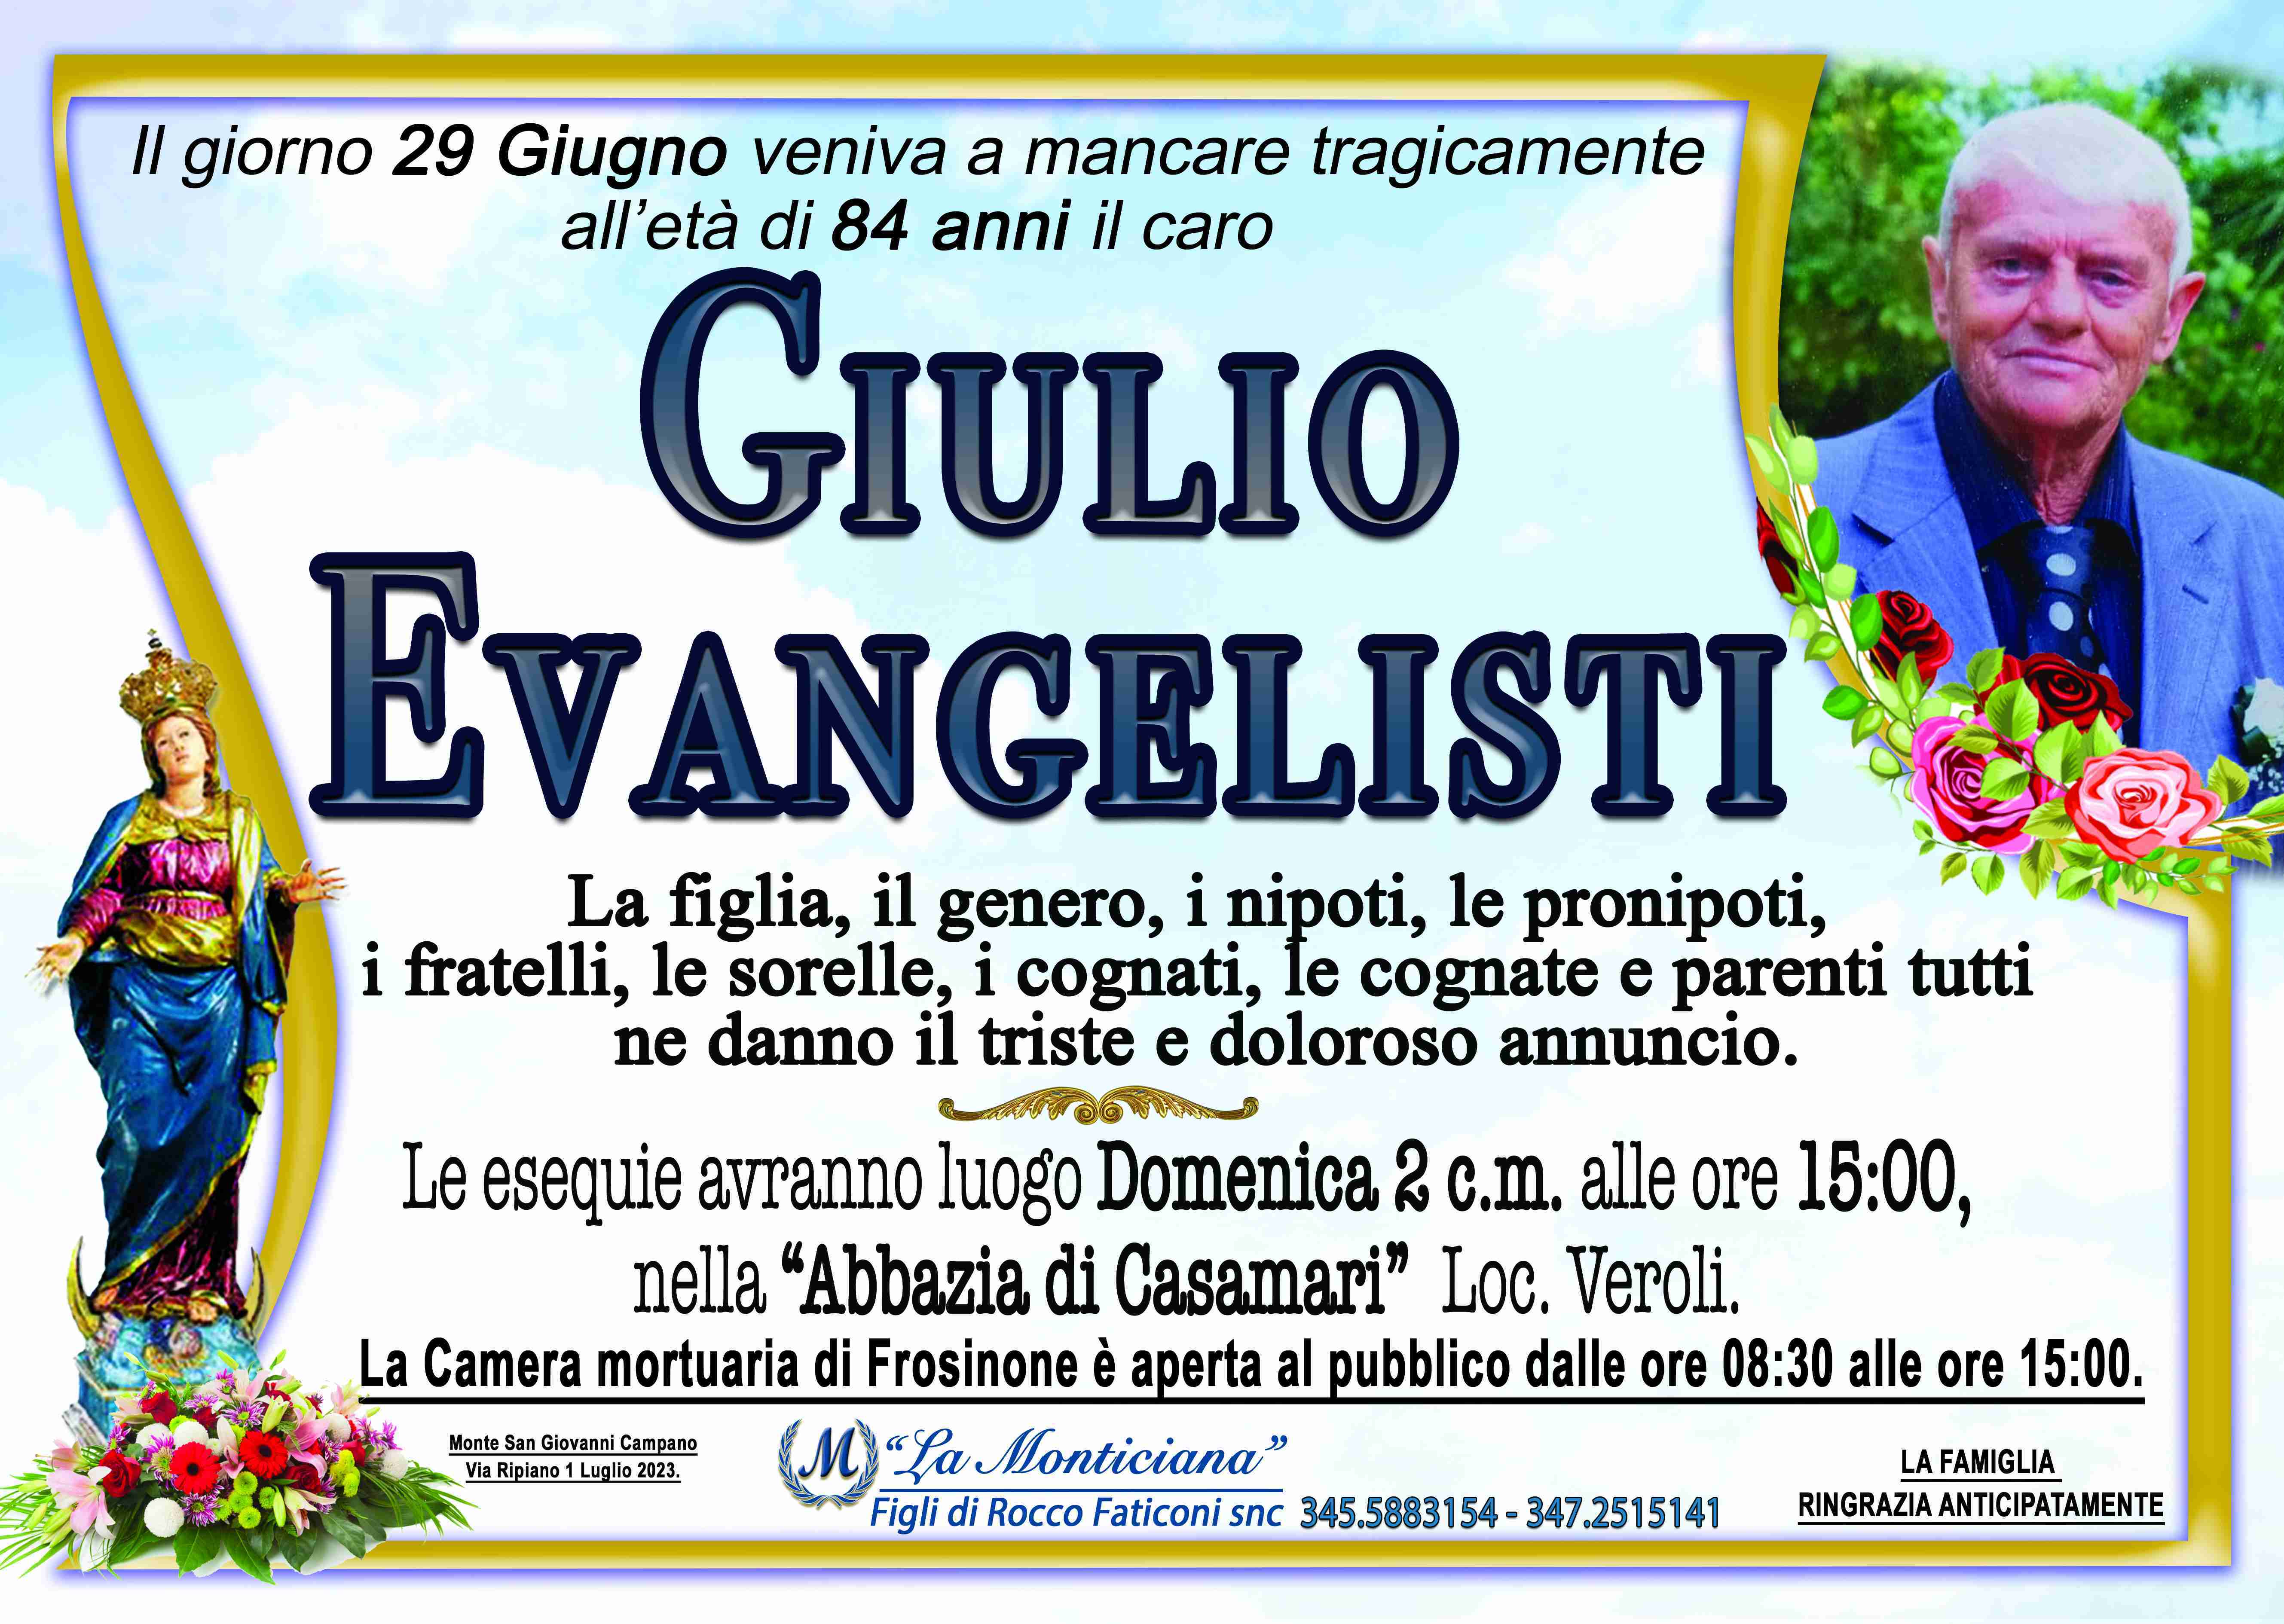 Giulio Evangelisti